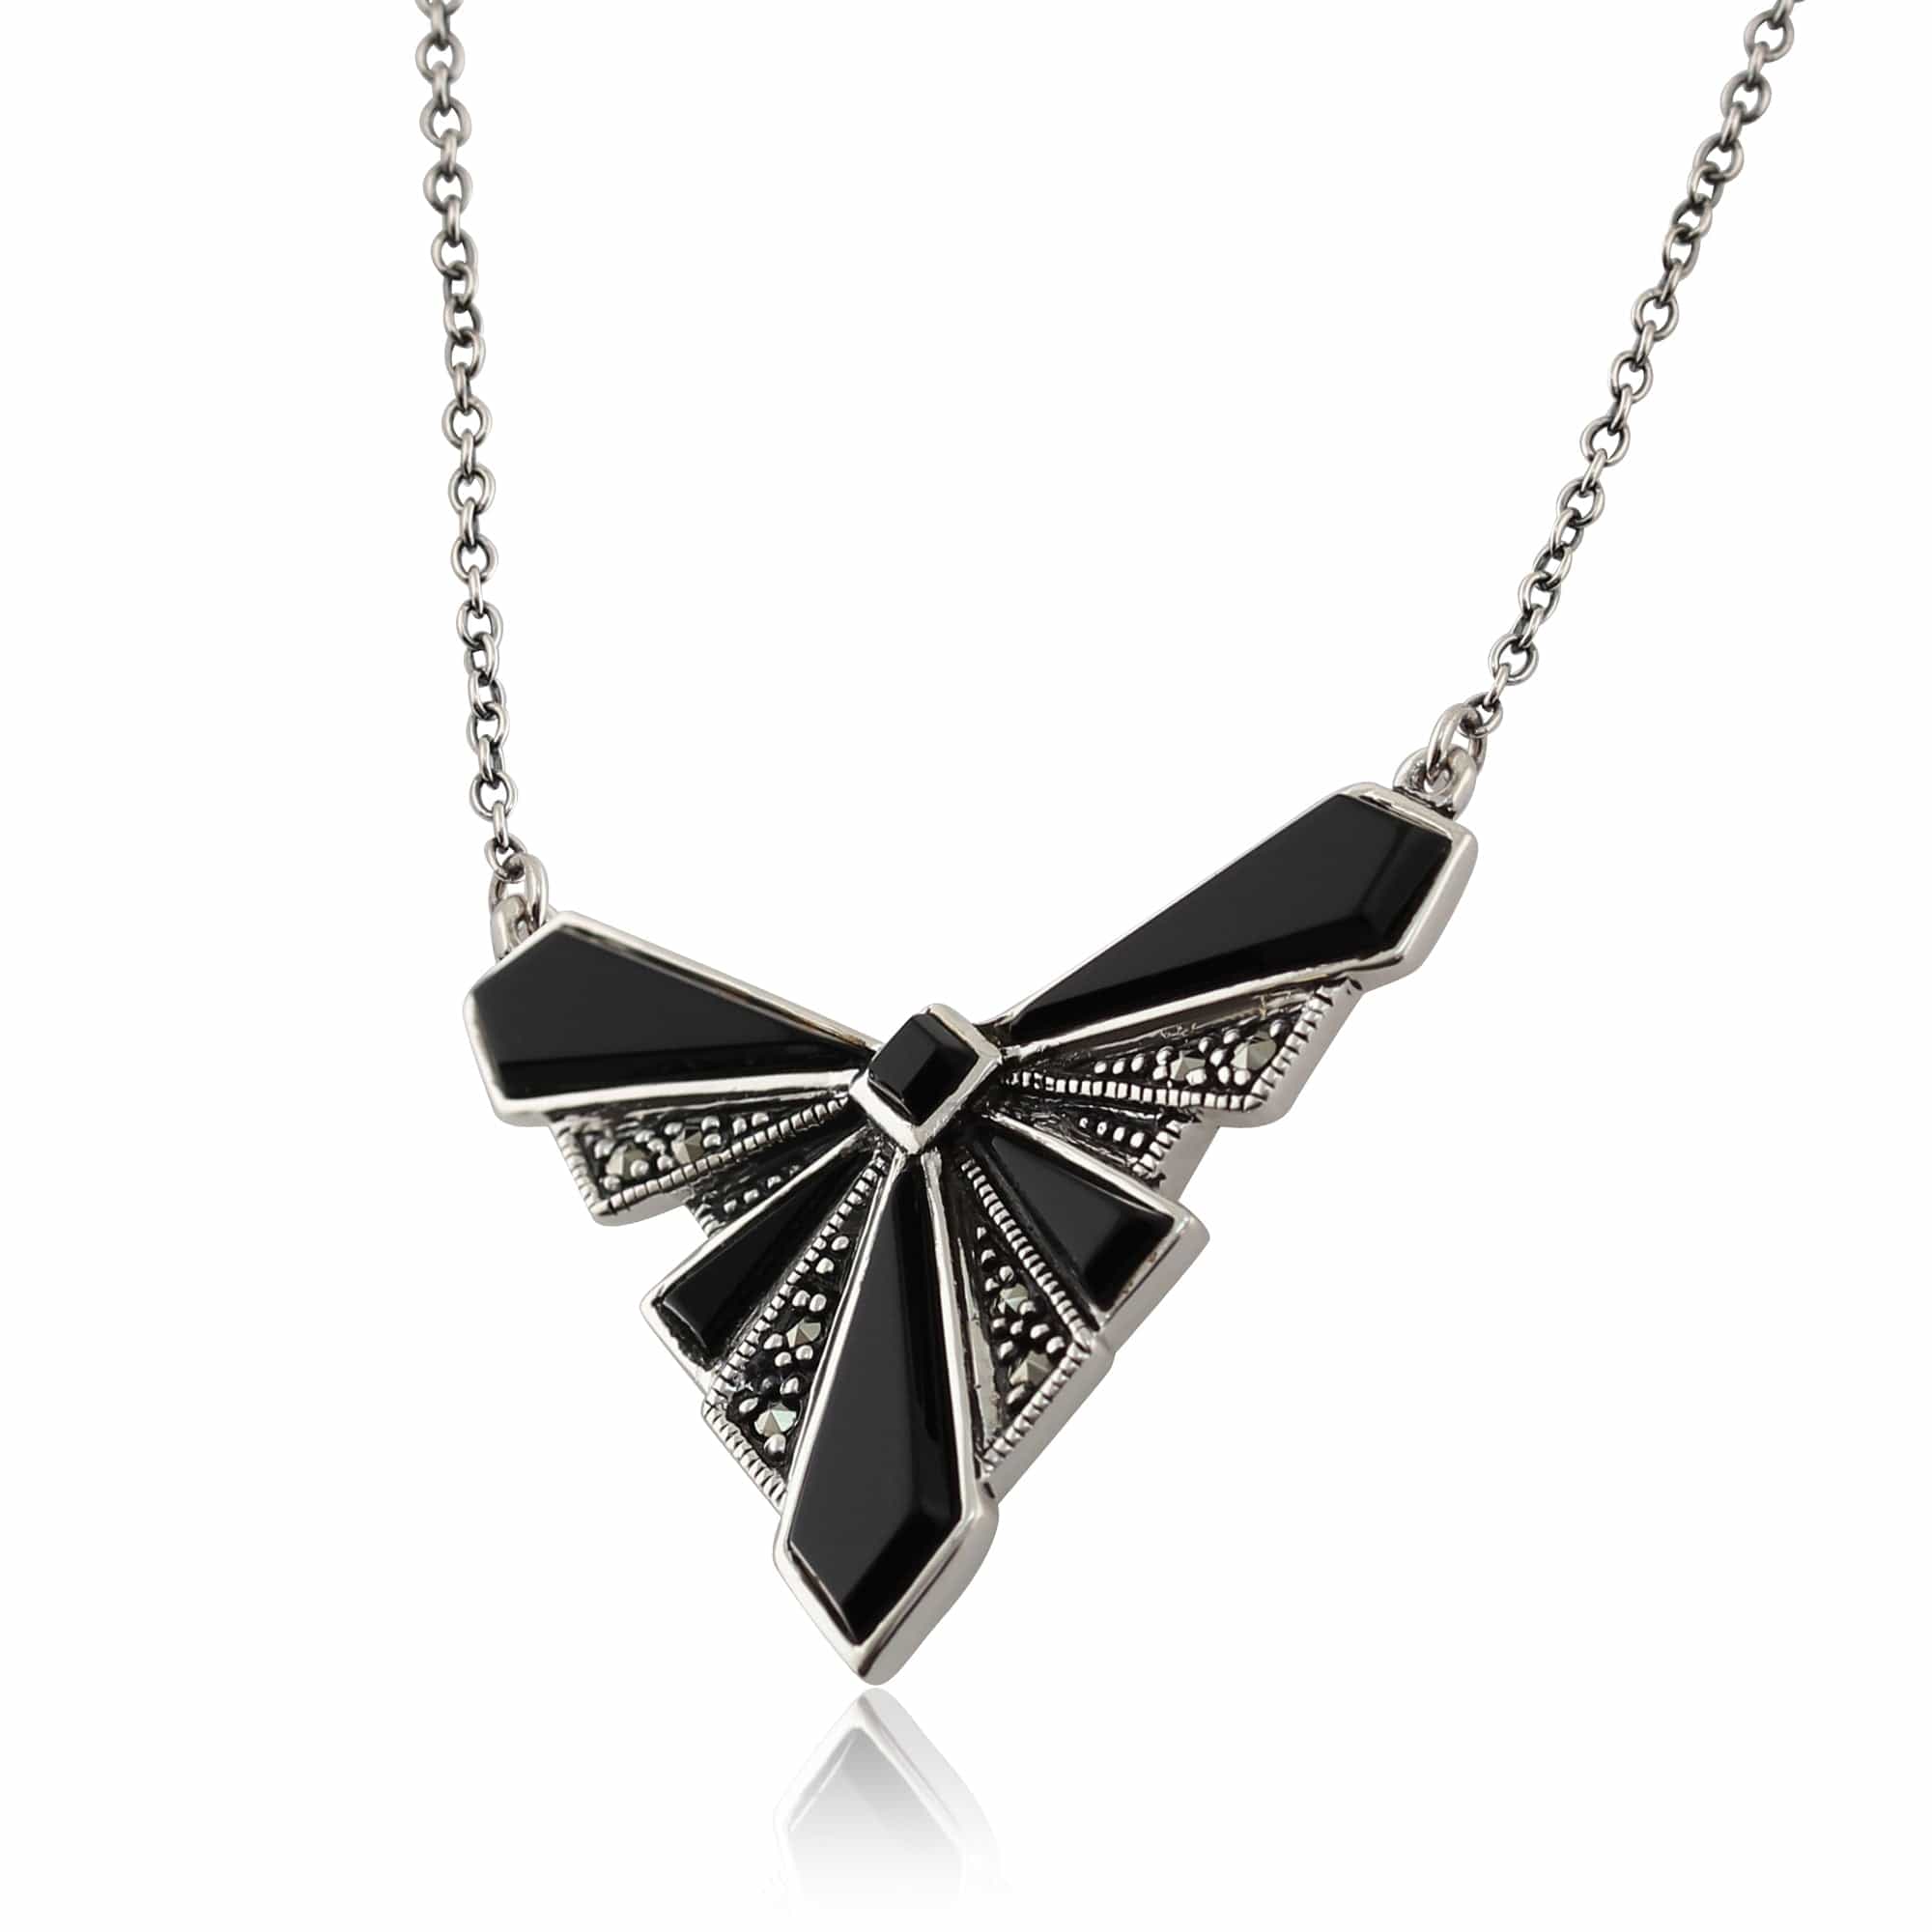 Art Deco Style Black Onyx Cabochon & Marcasite Necklace in 925 Sterling Silver - Gemondo